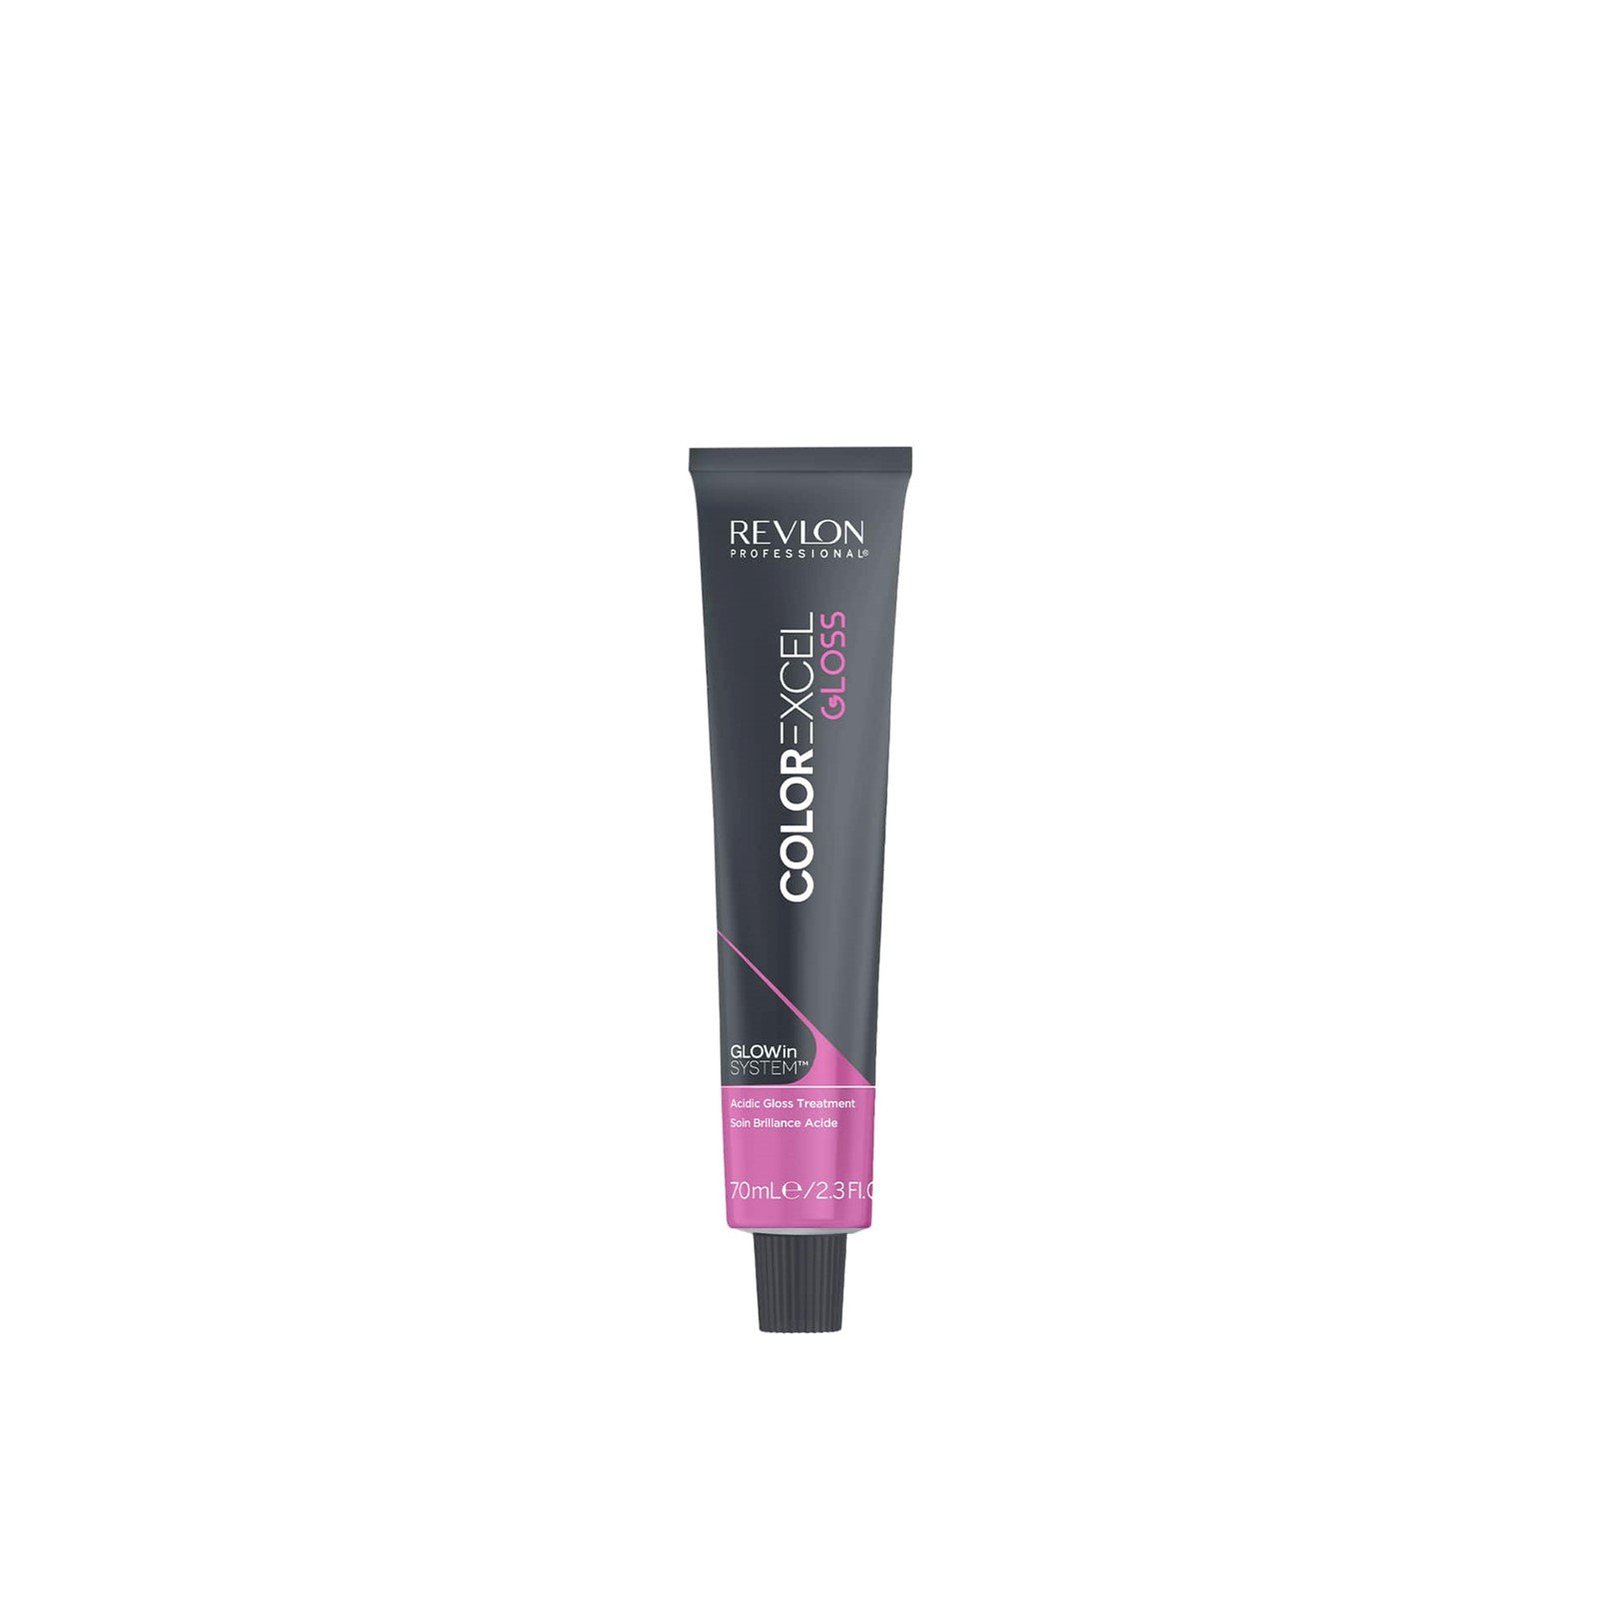 Revlon Professional Color Excel Gloss Acidic Gloss Treatment Demi-Permanent Hair Dye 10.01 Platinum Ice 70ml